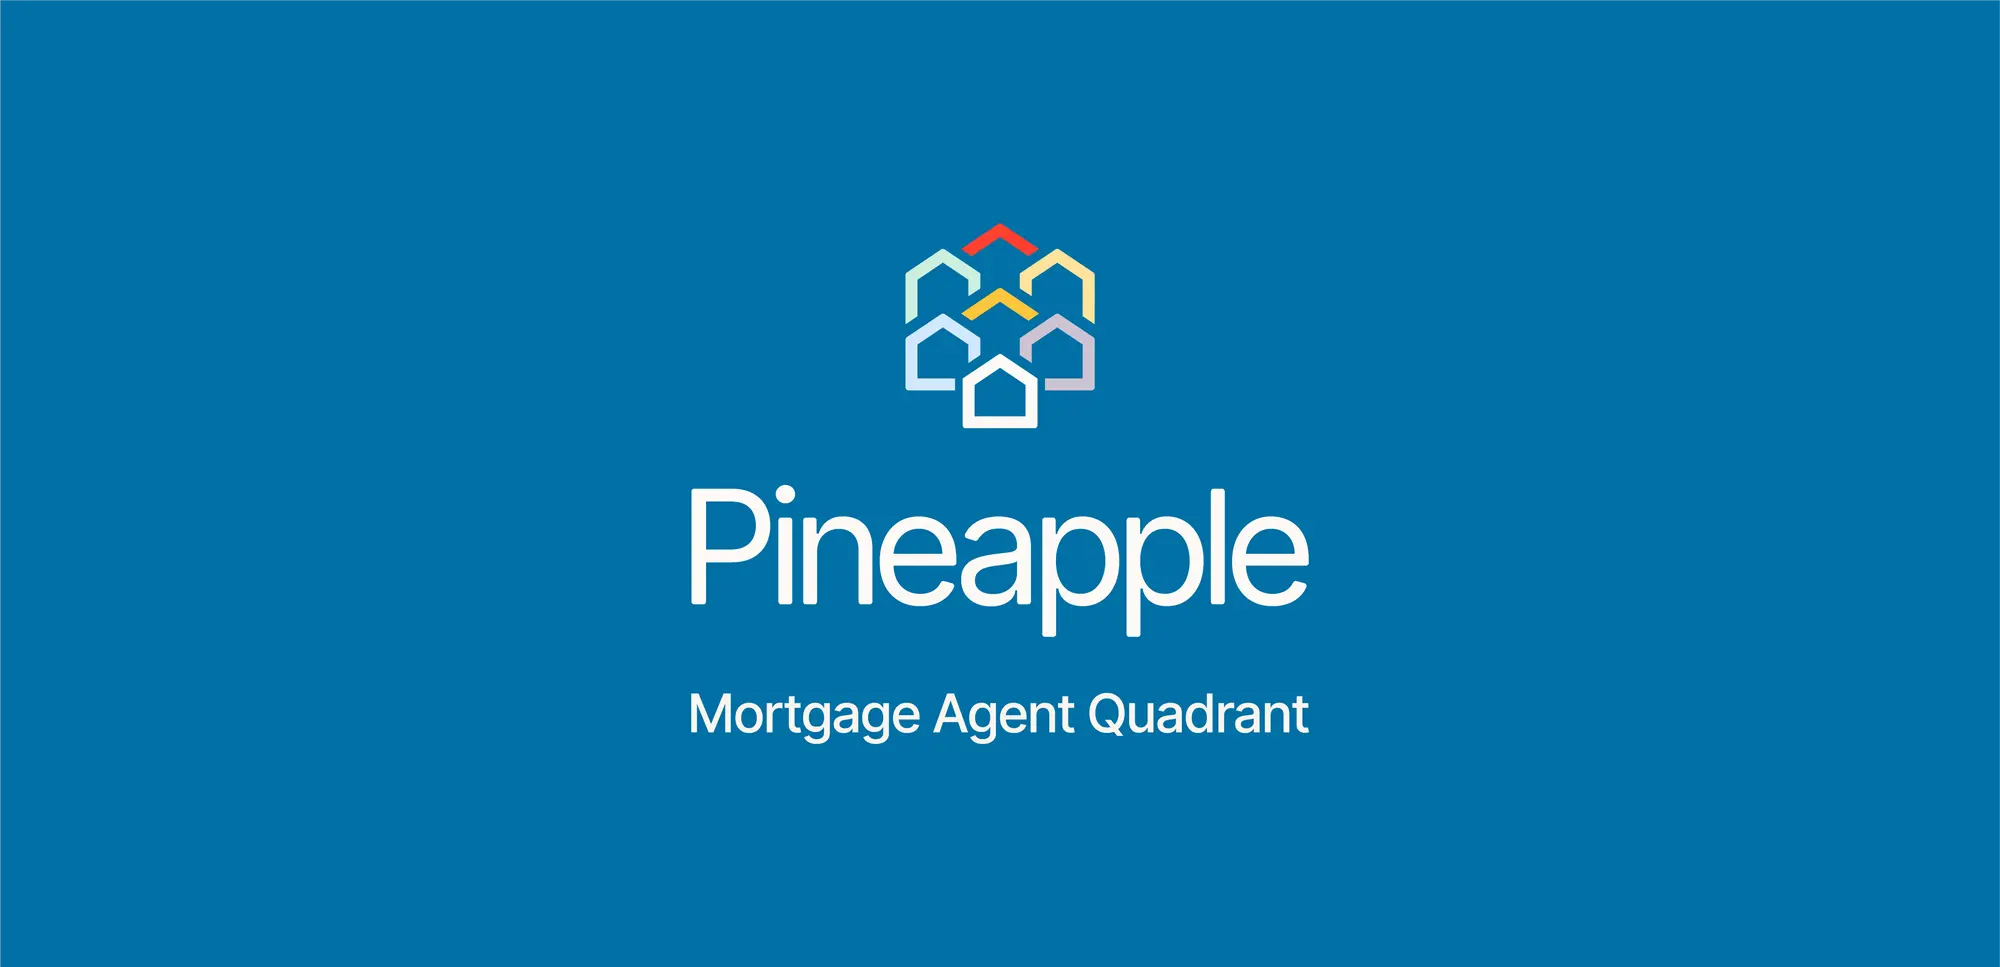 Pineapple Mortgage Agent Quadrant Registration 